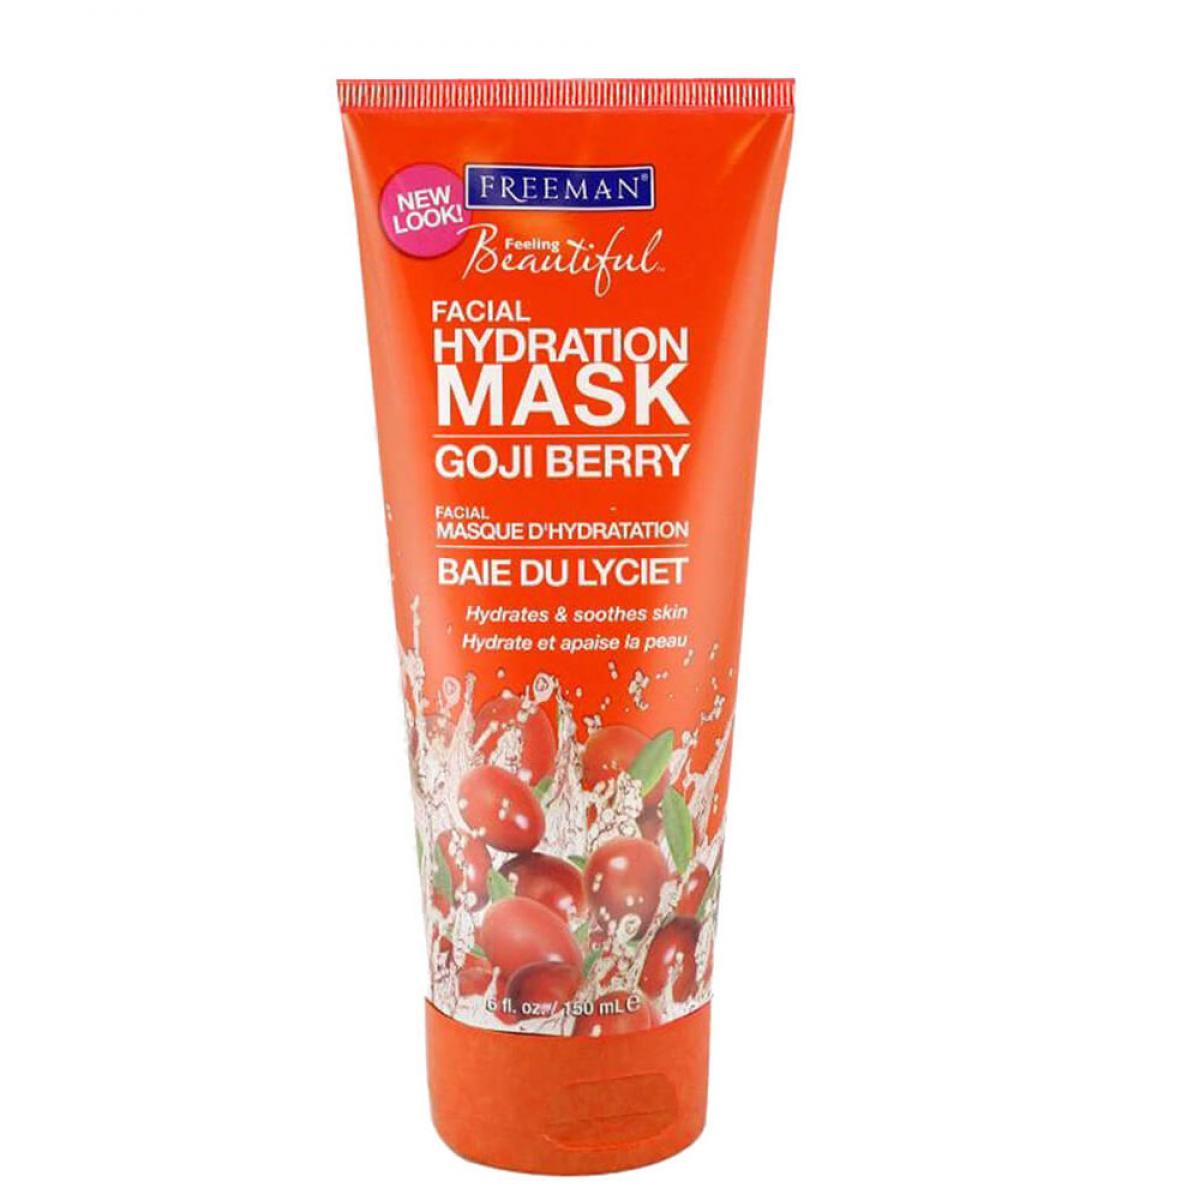 ماسک آبرسان قوی گوجی بری - Facial Hydration Mask Goji Berry